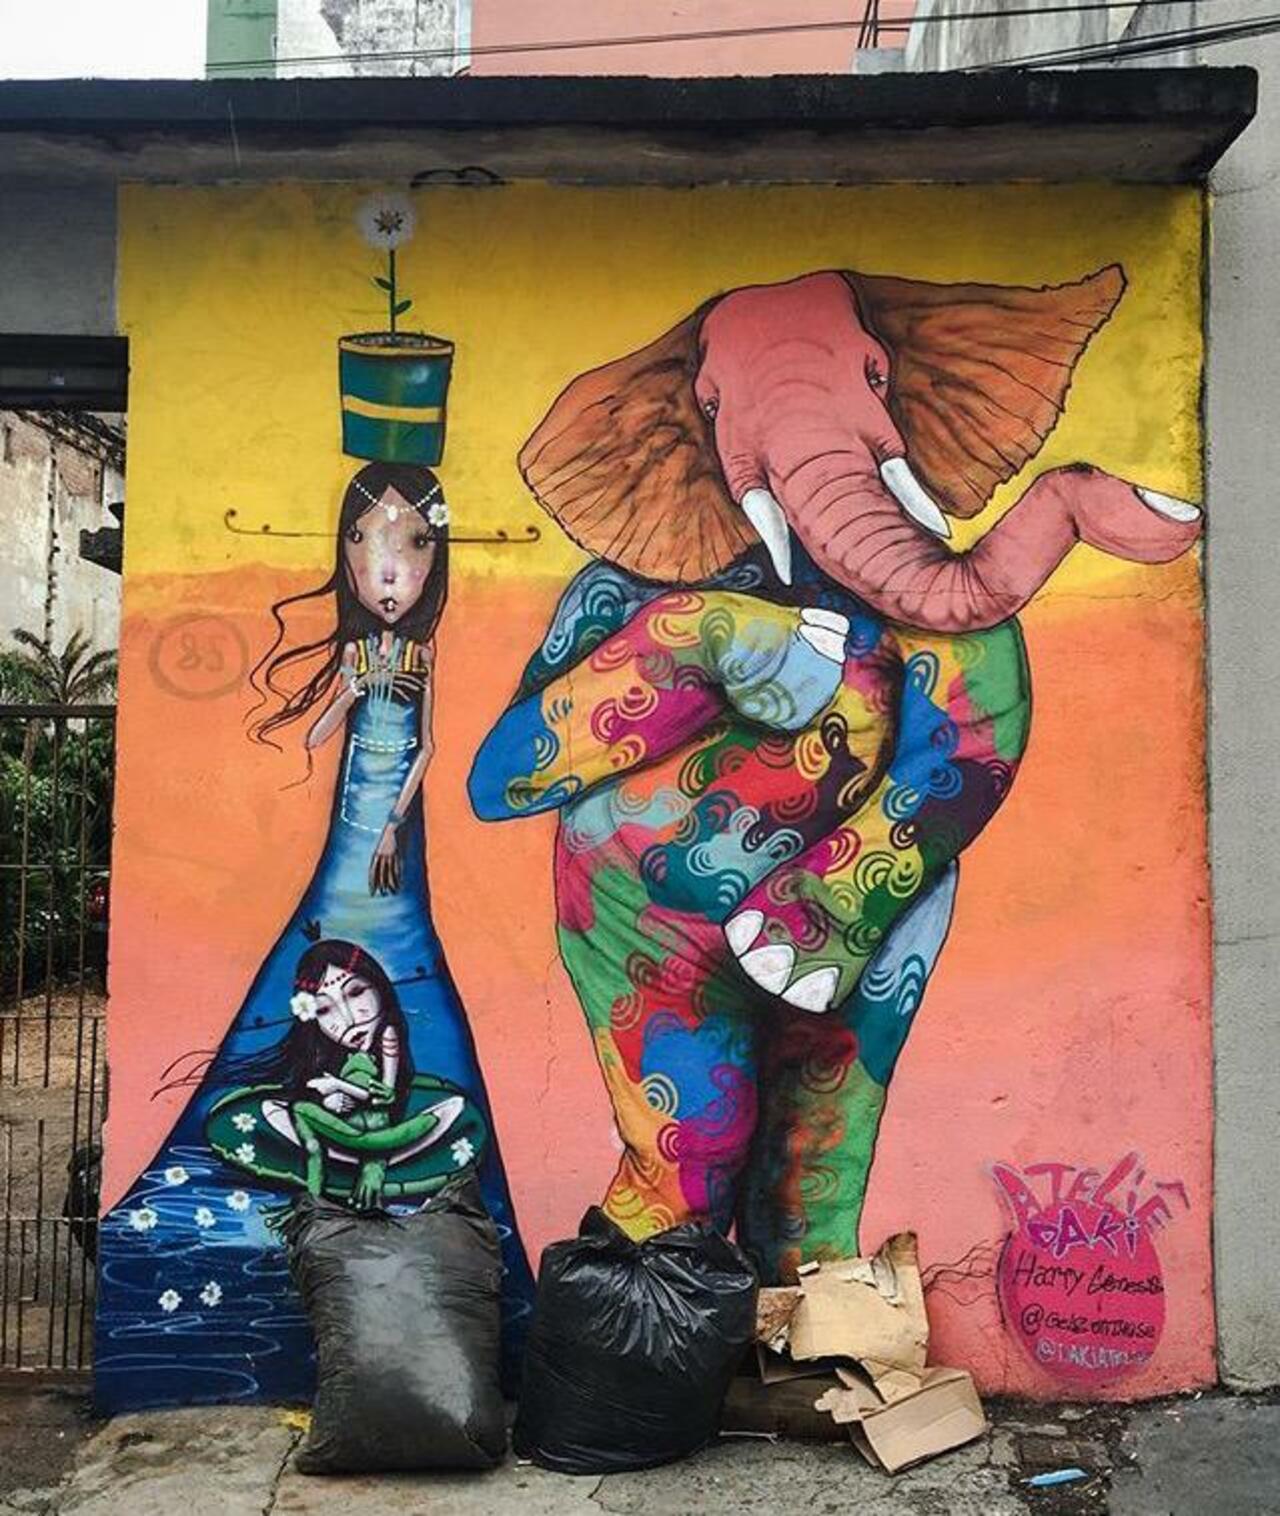 Street Art by Harry Geneis & Gelson in São Paulo #art #mural #graffiti #streetart http://t.co/SlLbhuMZfD … … http://twitter.com/GoogleStreetArt/status/648016473831645184/photo/1/large?utm_source=fb&utm_medium=fb&utm_campaign=charlesjackso14&utm_content=648021460561338368